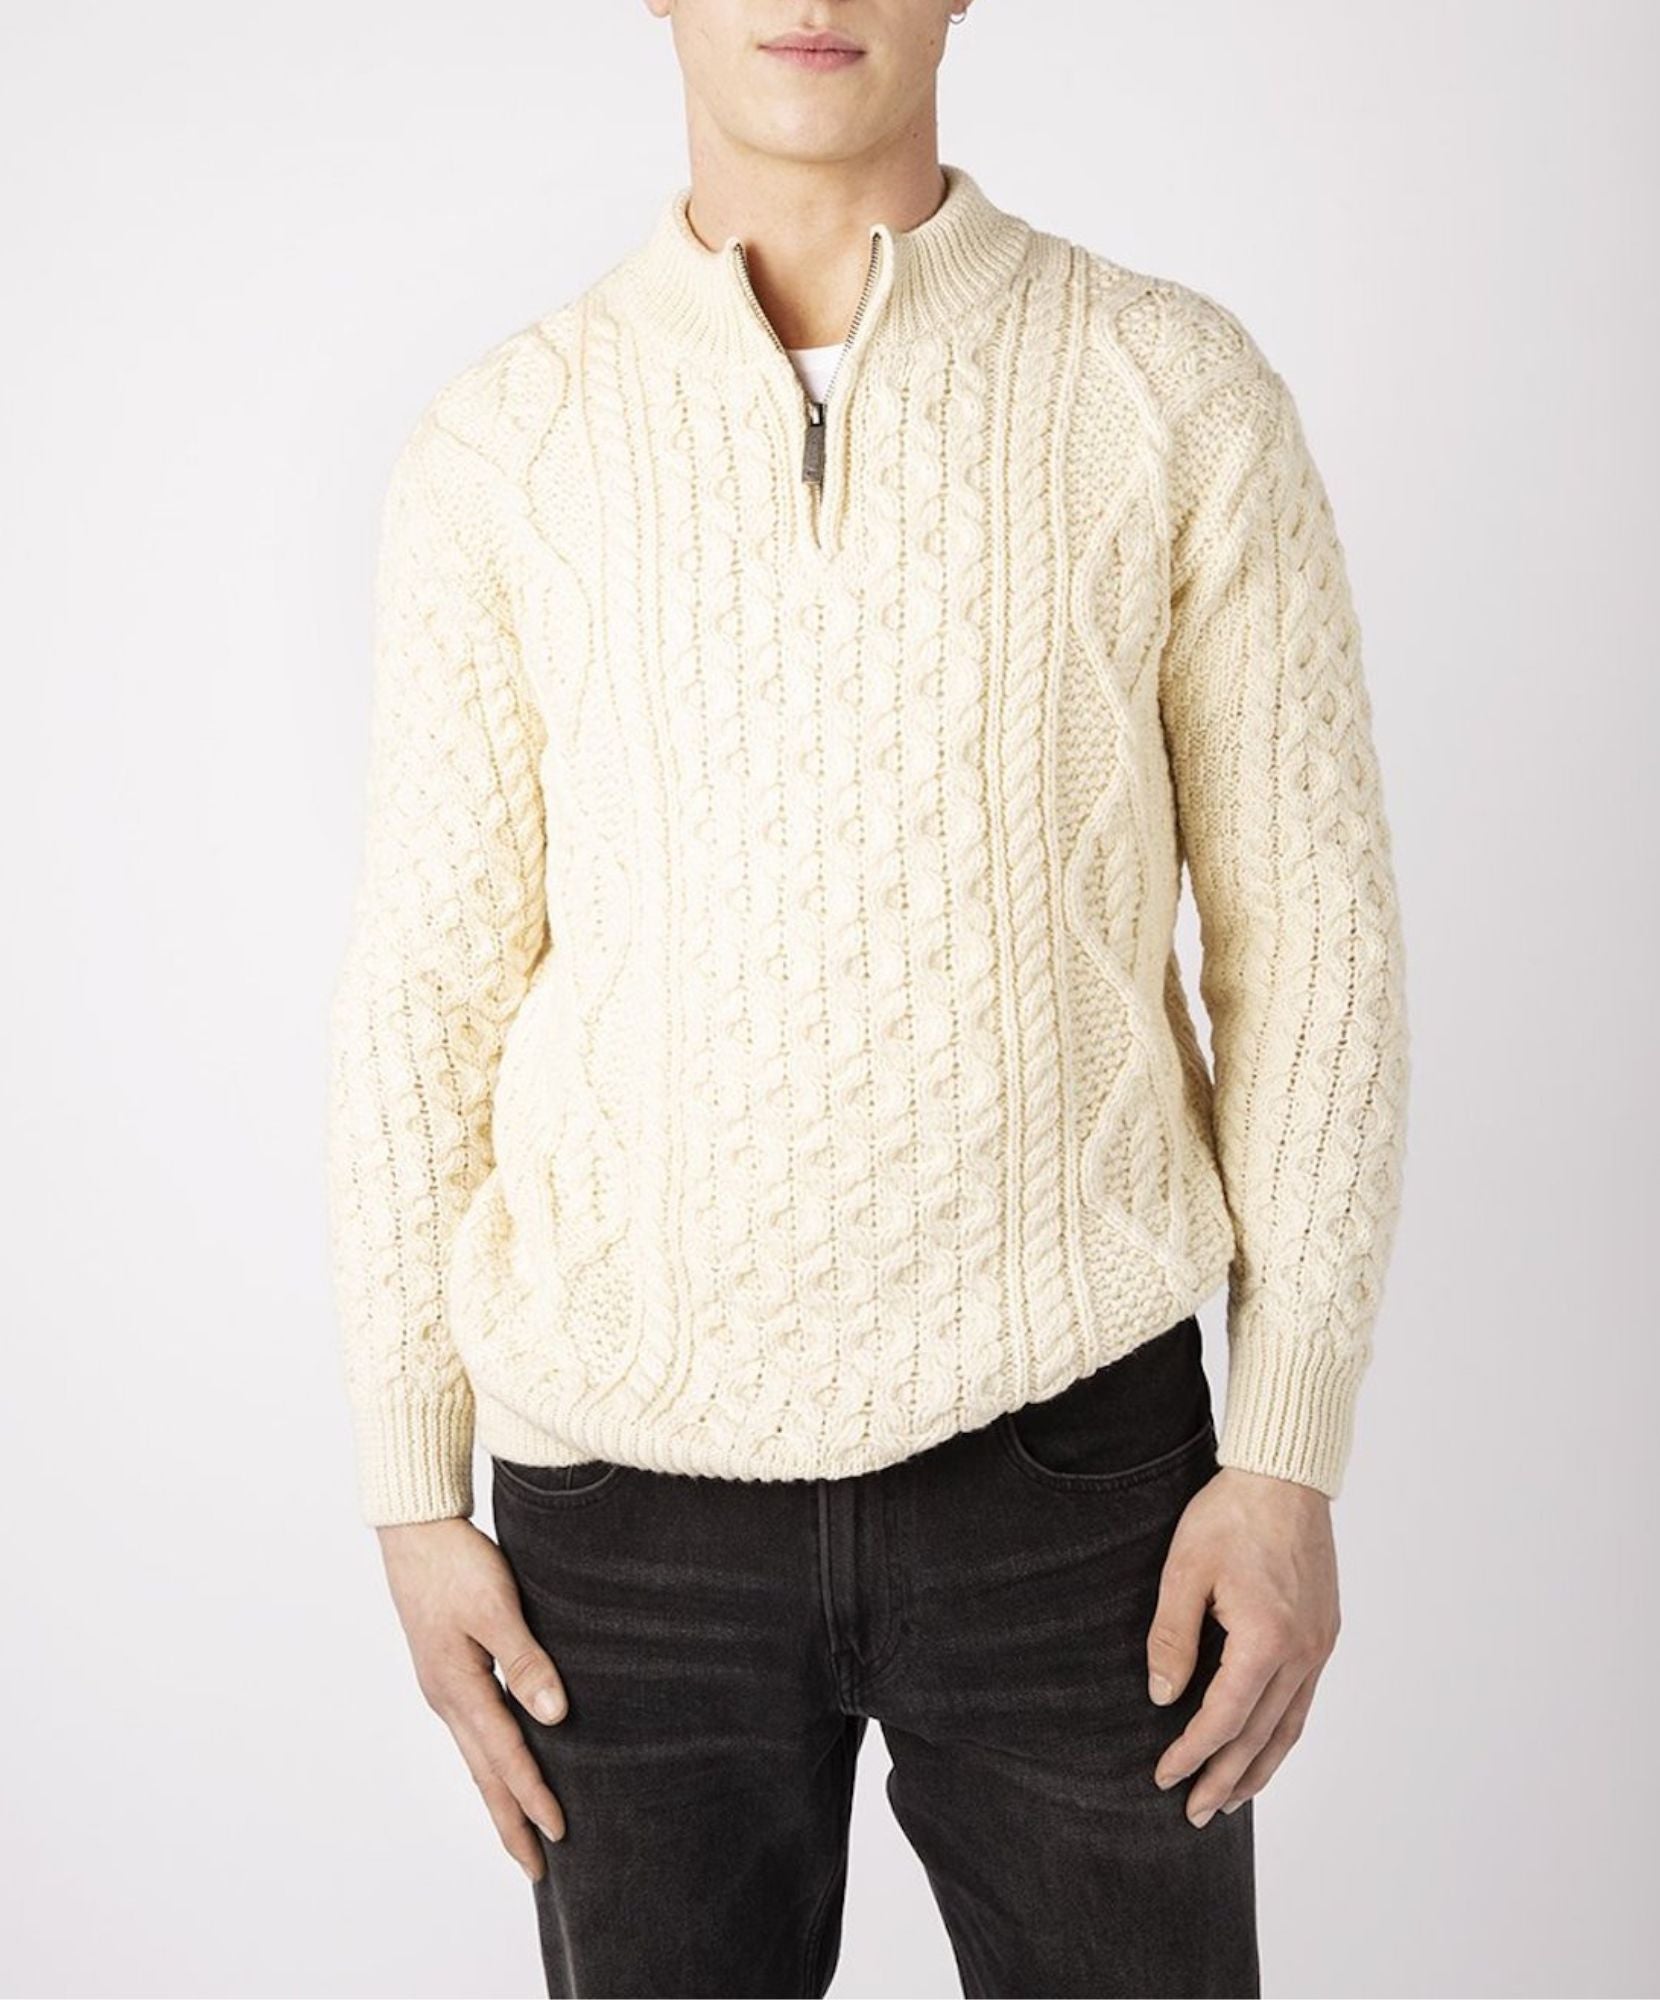 IrelandsEye Knitwear Dris Aran Zip Neck Sweater in Natural